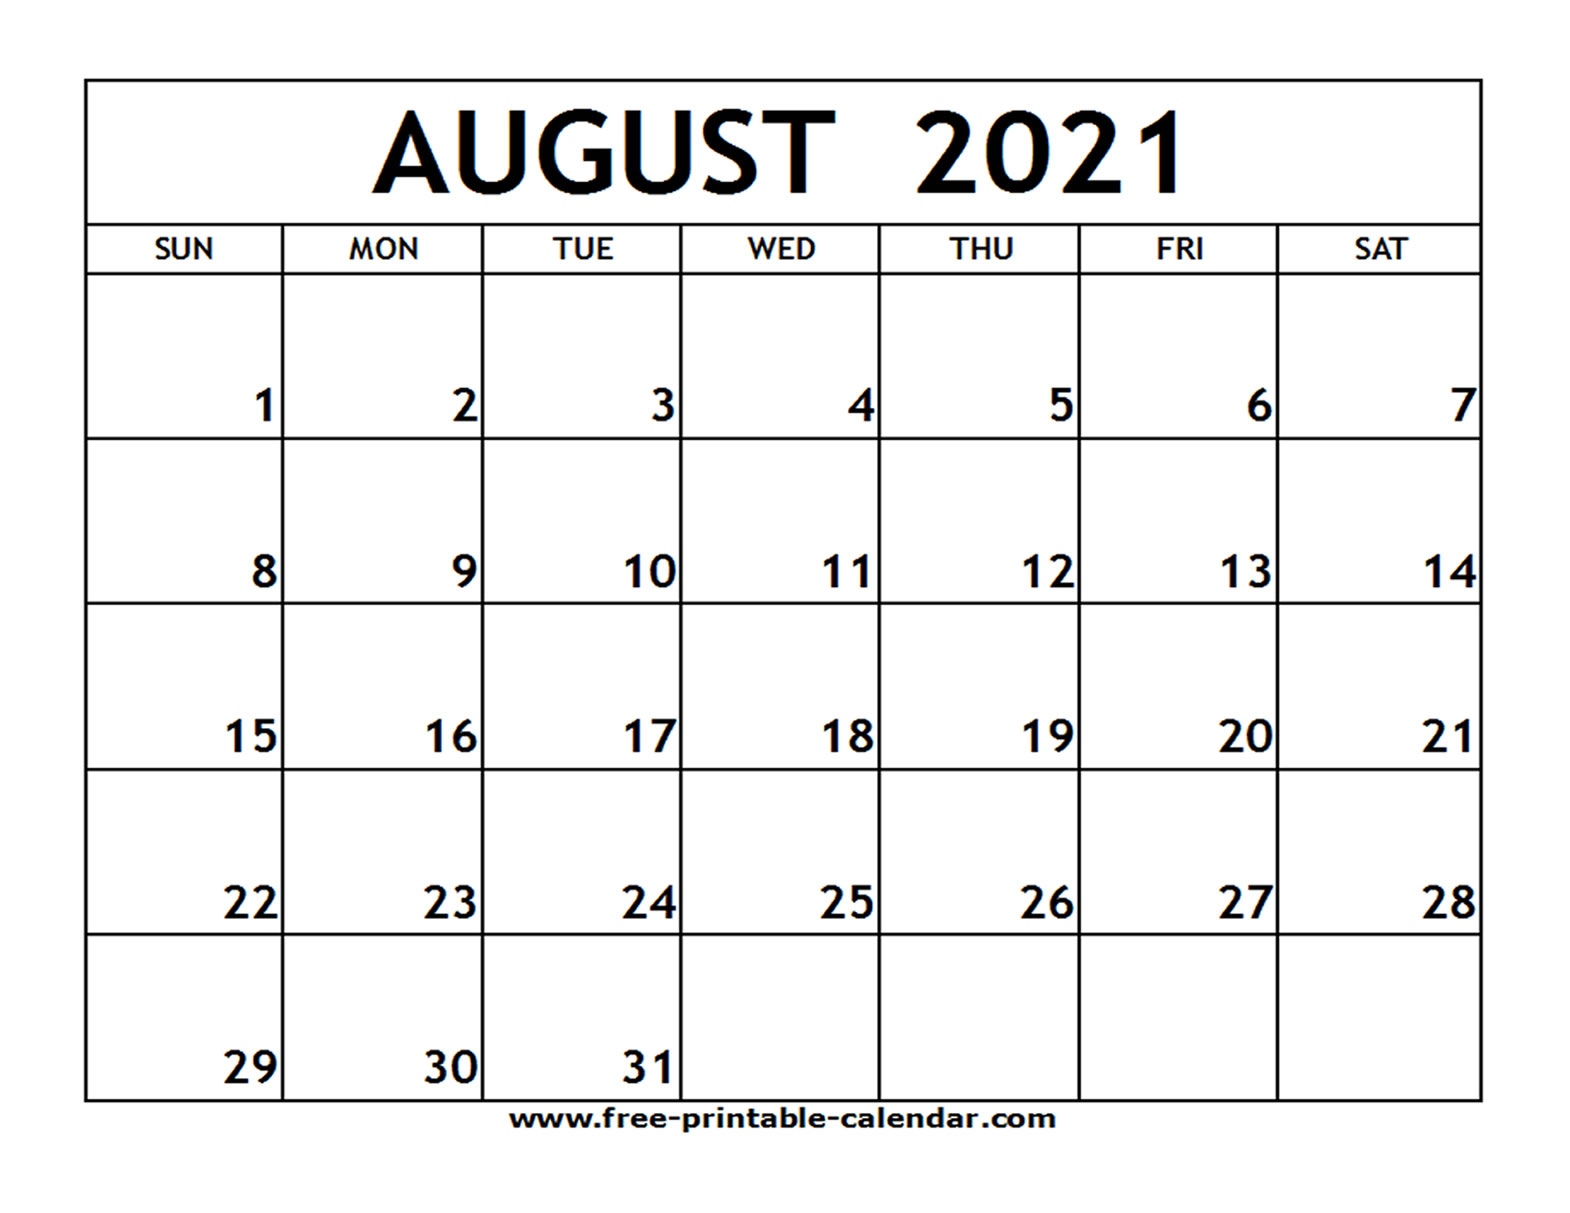 August 2021 Printable Calendar - Free-Printable-Calendar